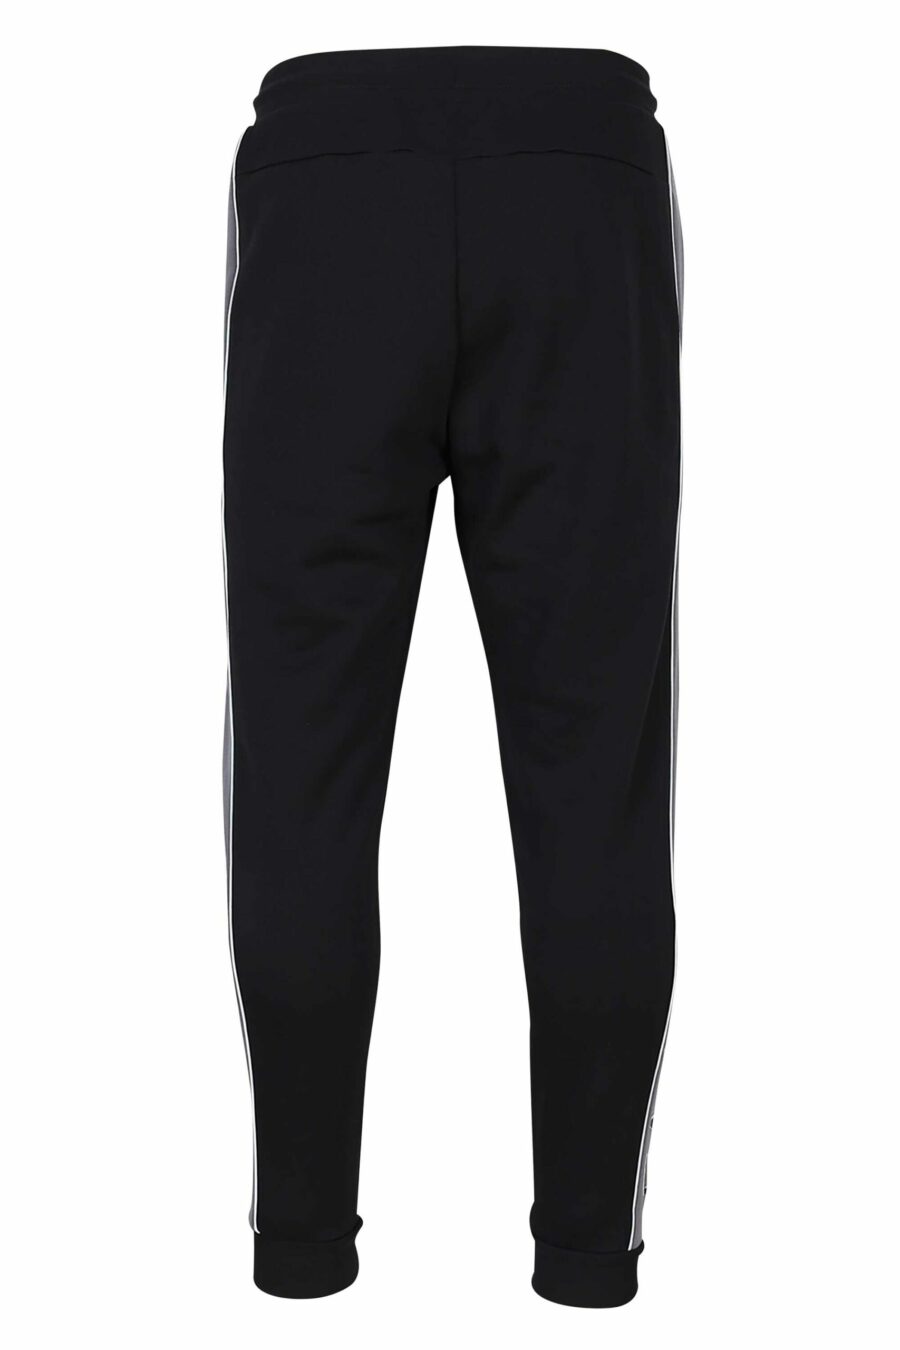 Pantalón de chándal negro con lineas grises laterales y minilogo "lux identity" - 8056787946842 2 scaled